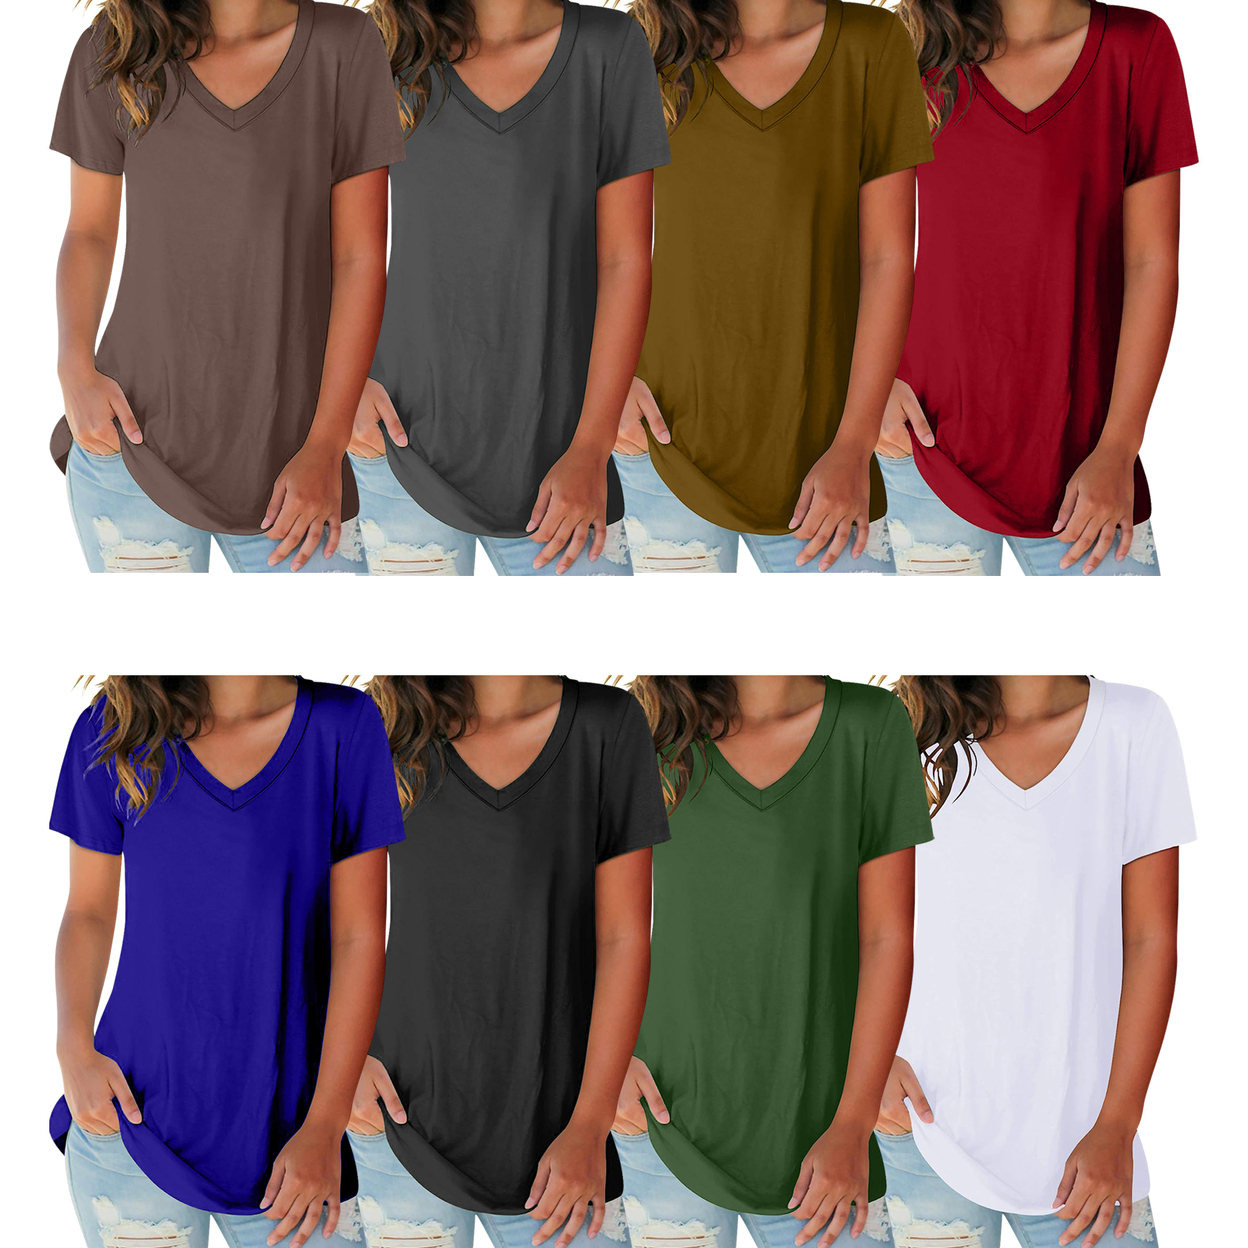 2-Pack: Women's Ultra Soft Smooth Cotton Blend Basic V-Neck Short Sleeve Shirts - Grey & Navy, Large